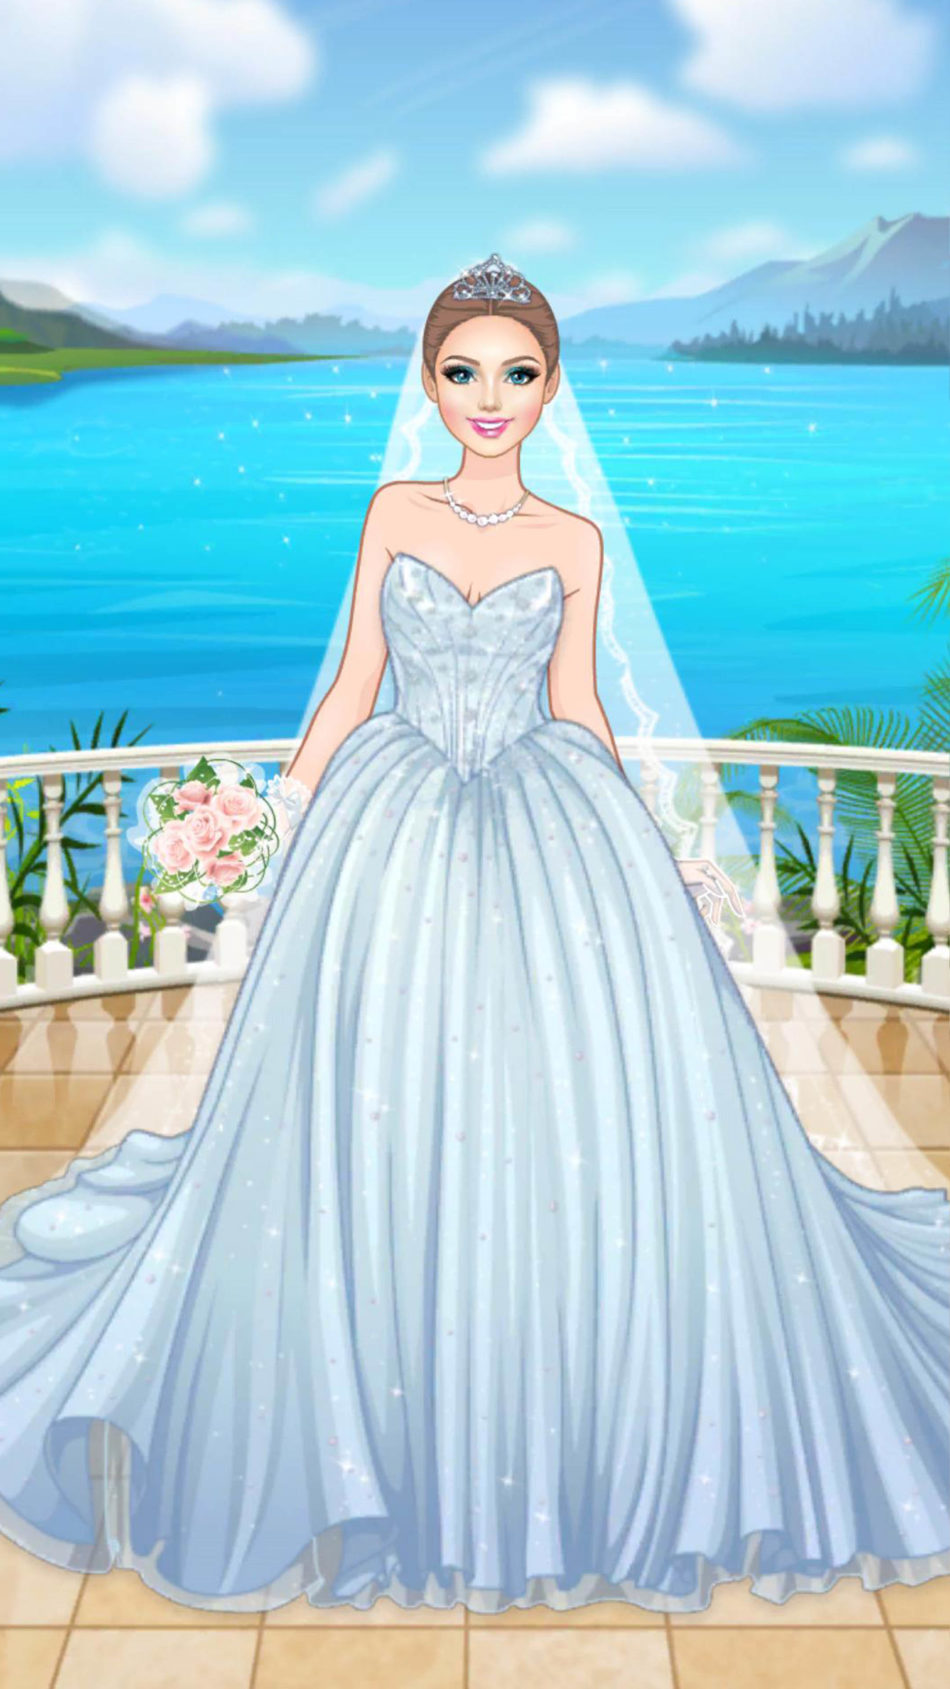 Fairy Girl Wedding Dress 4K Ultra HD Mobile Wallpaper